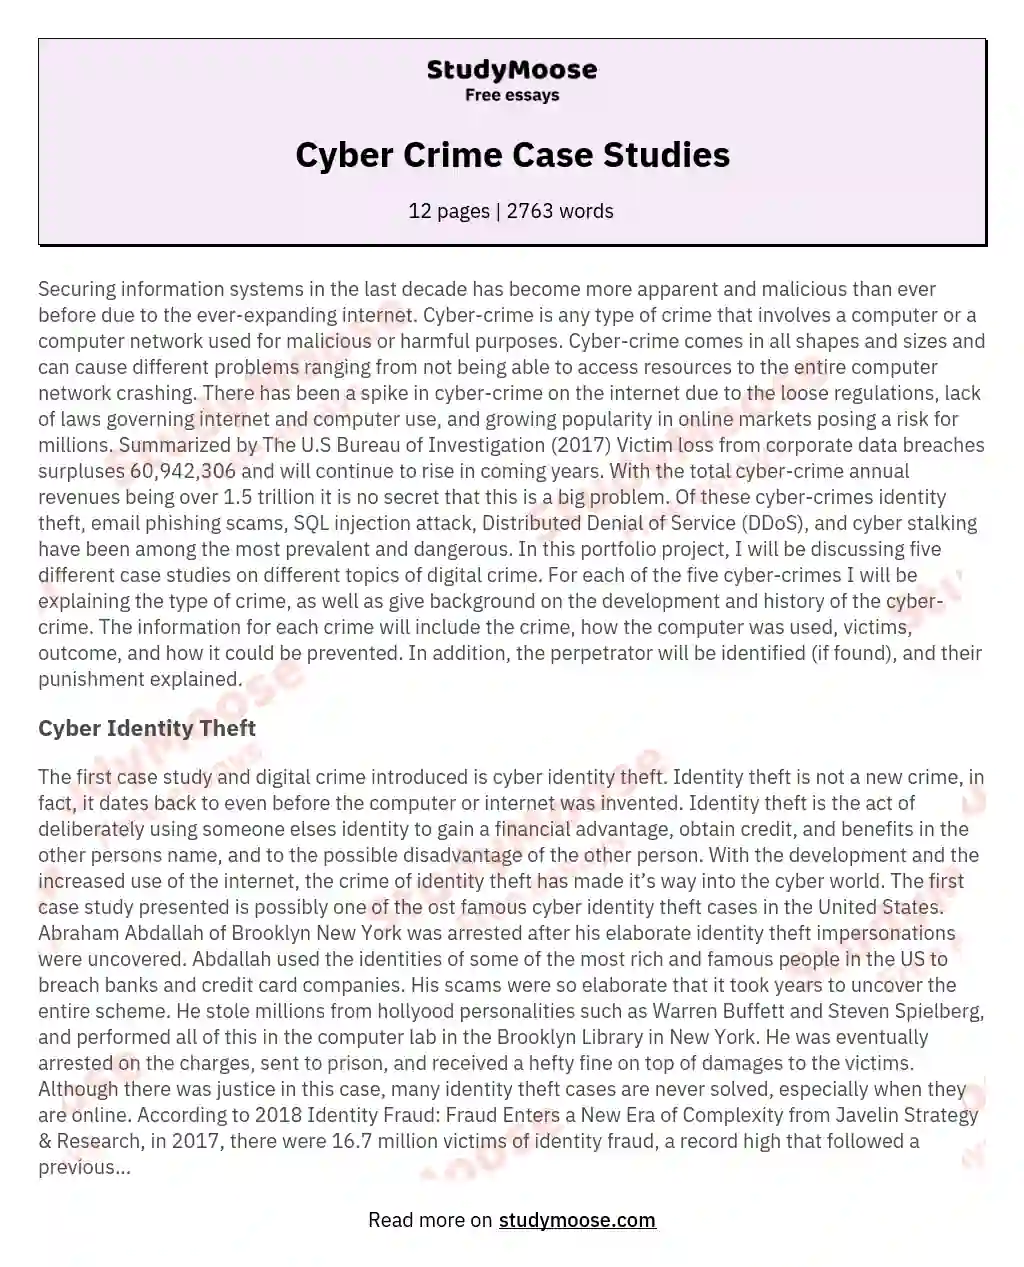 Cyber Crime Case Studies essay